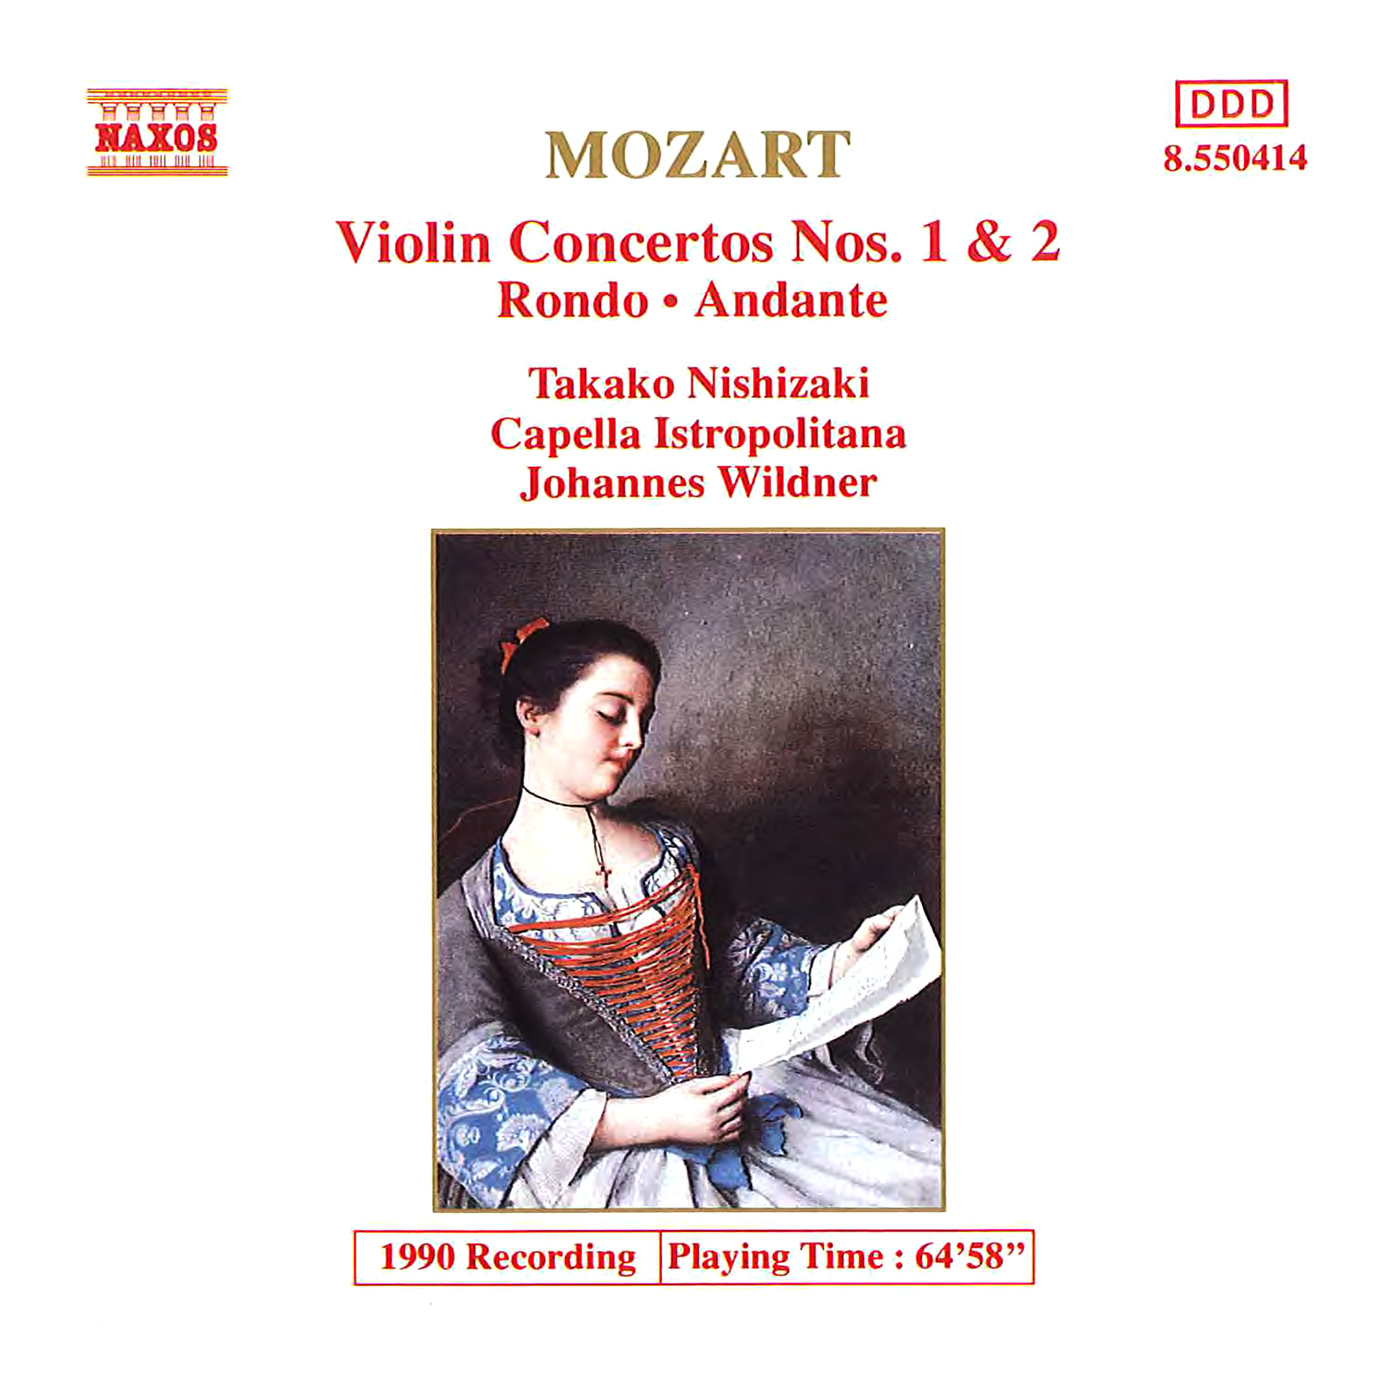 Violin Concerto No. 1 in B-Flat Major, K. 207:I. Allegro moderato